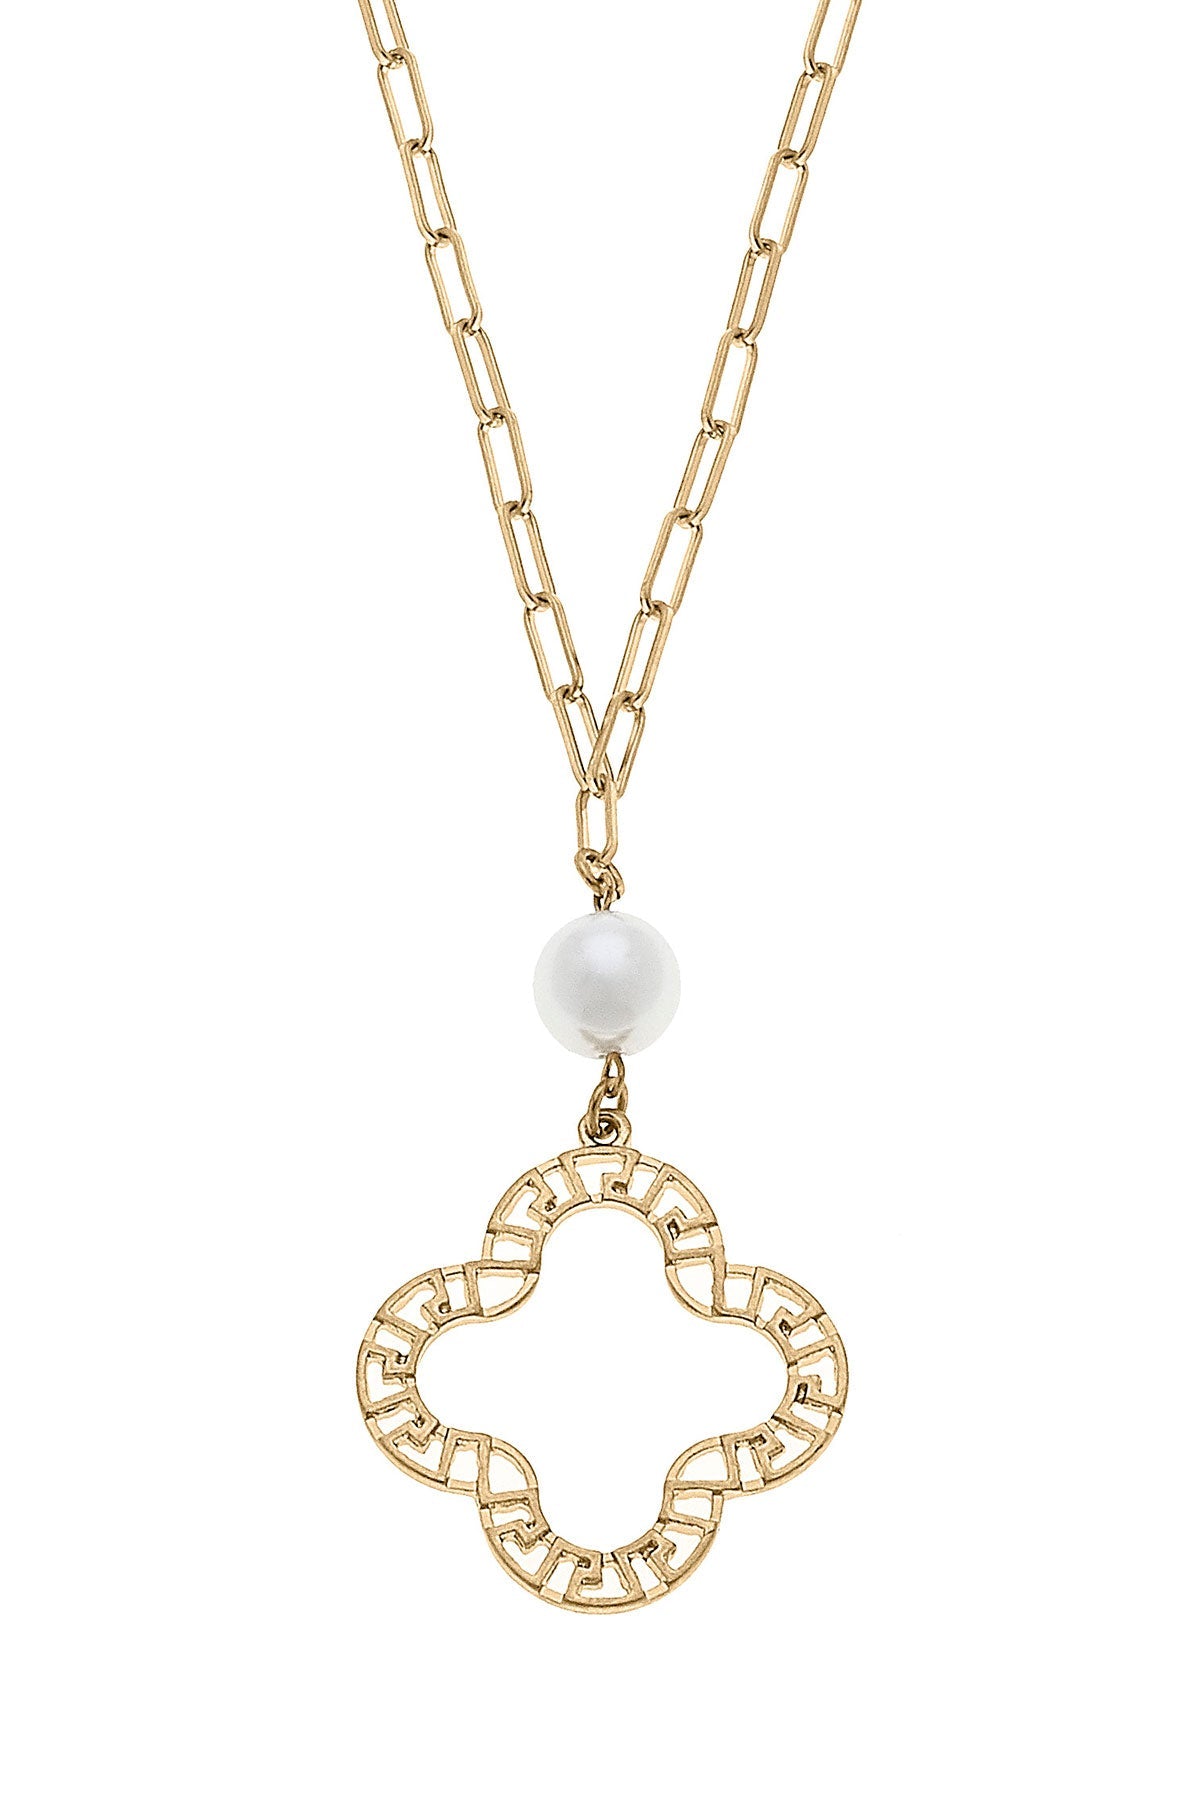 Nicole Pearl & Greek Keys Clover Pendant Necklace in Worn Gold